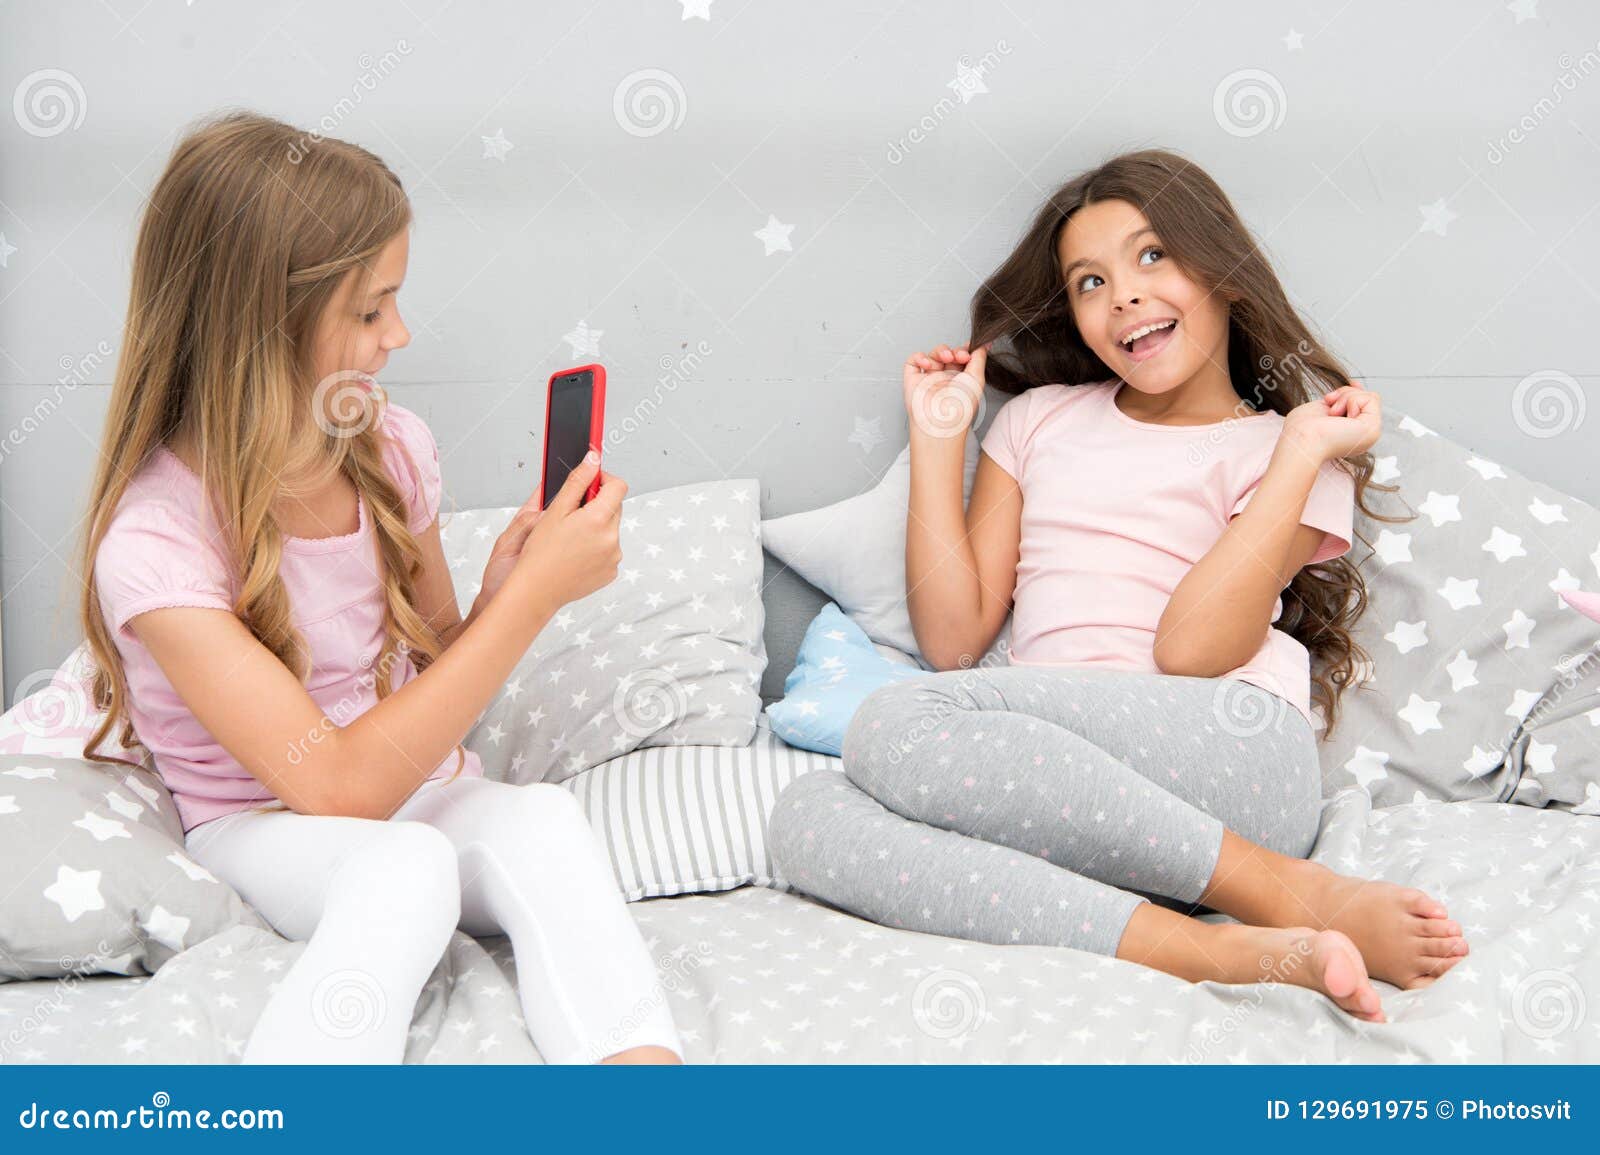 Girlish Leisure Pajama Party. Girls Smartphone Posing Great Shot. Send ...